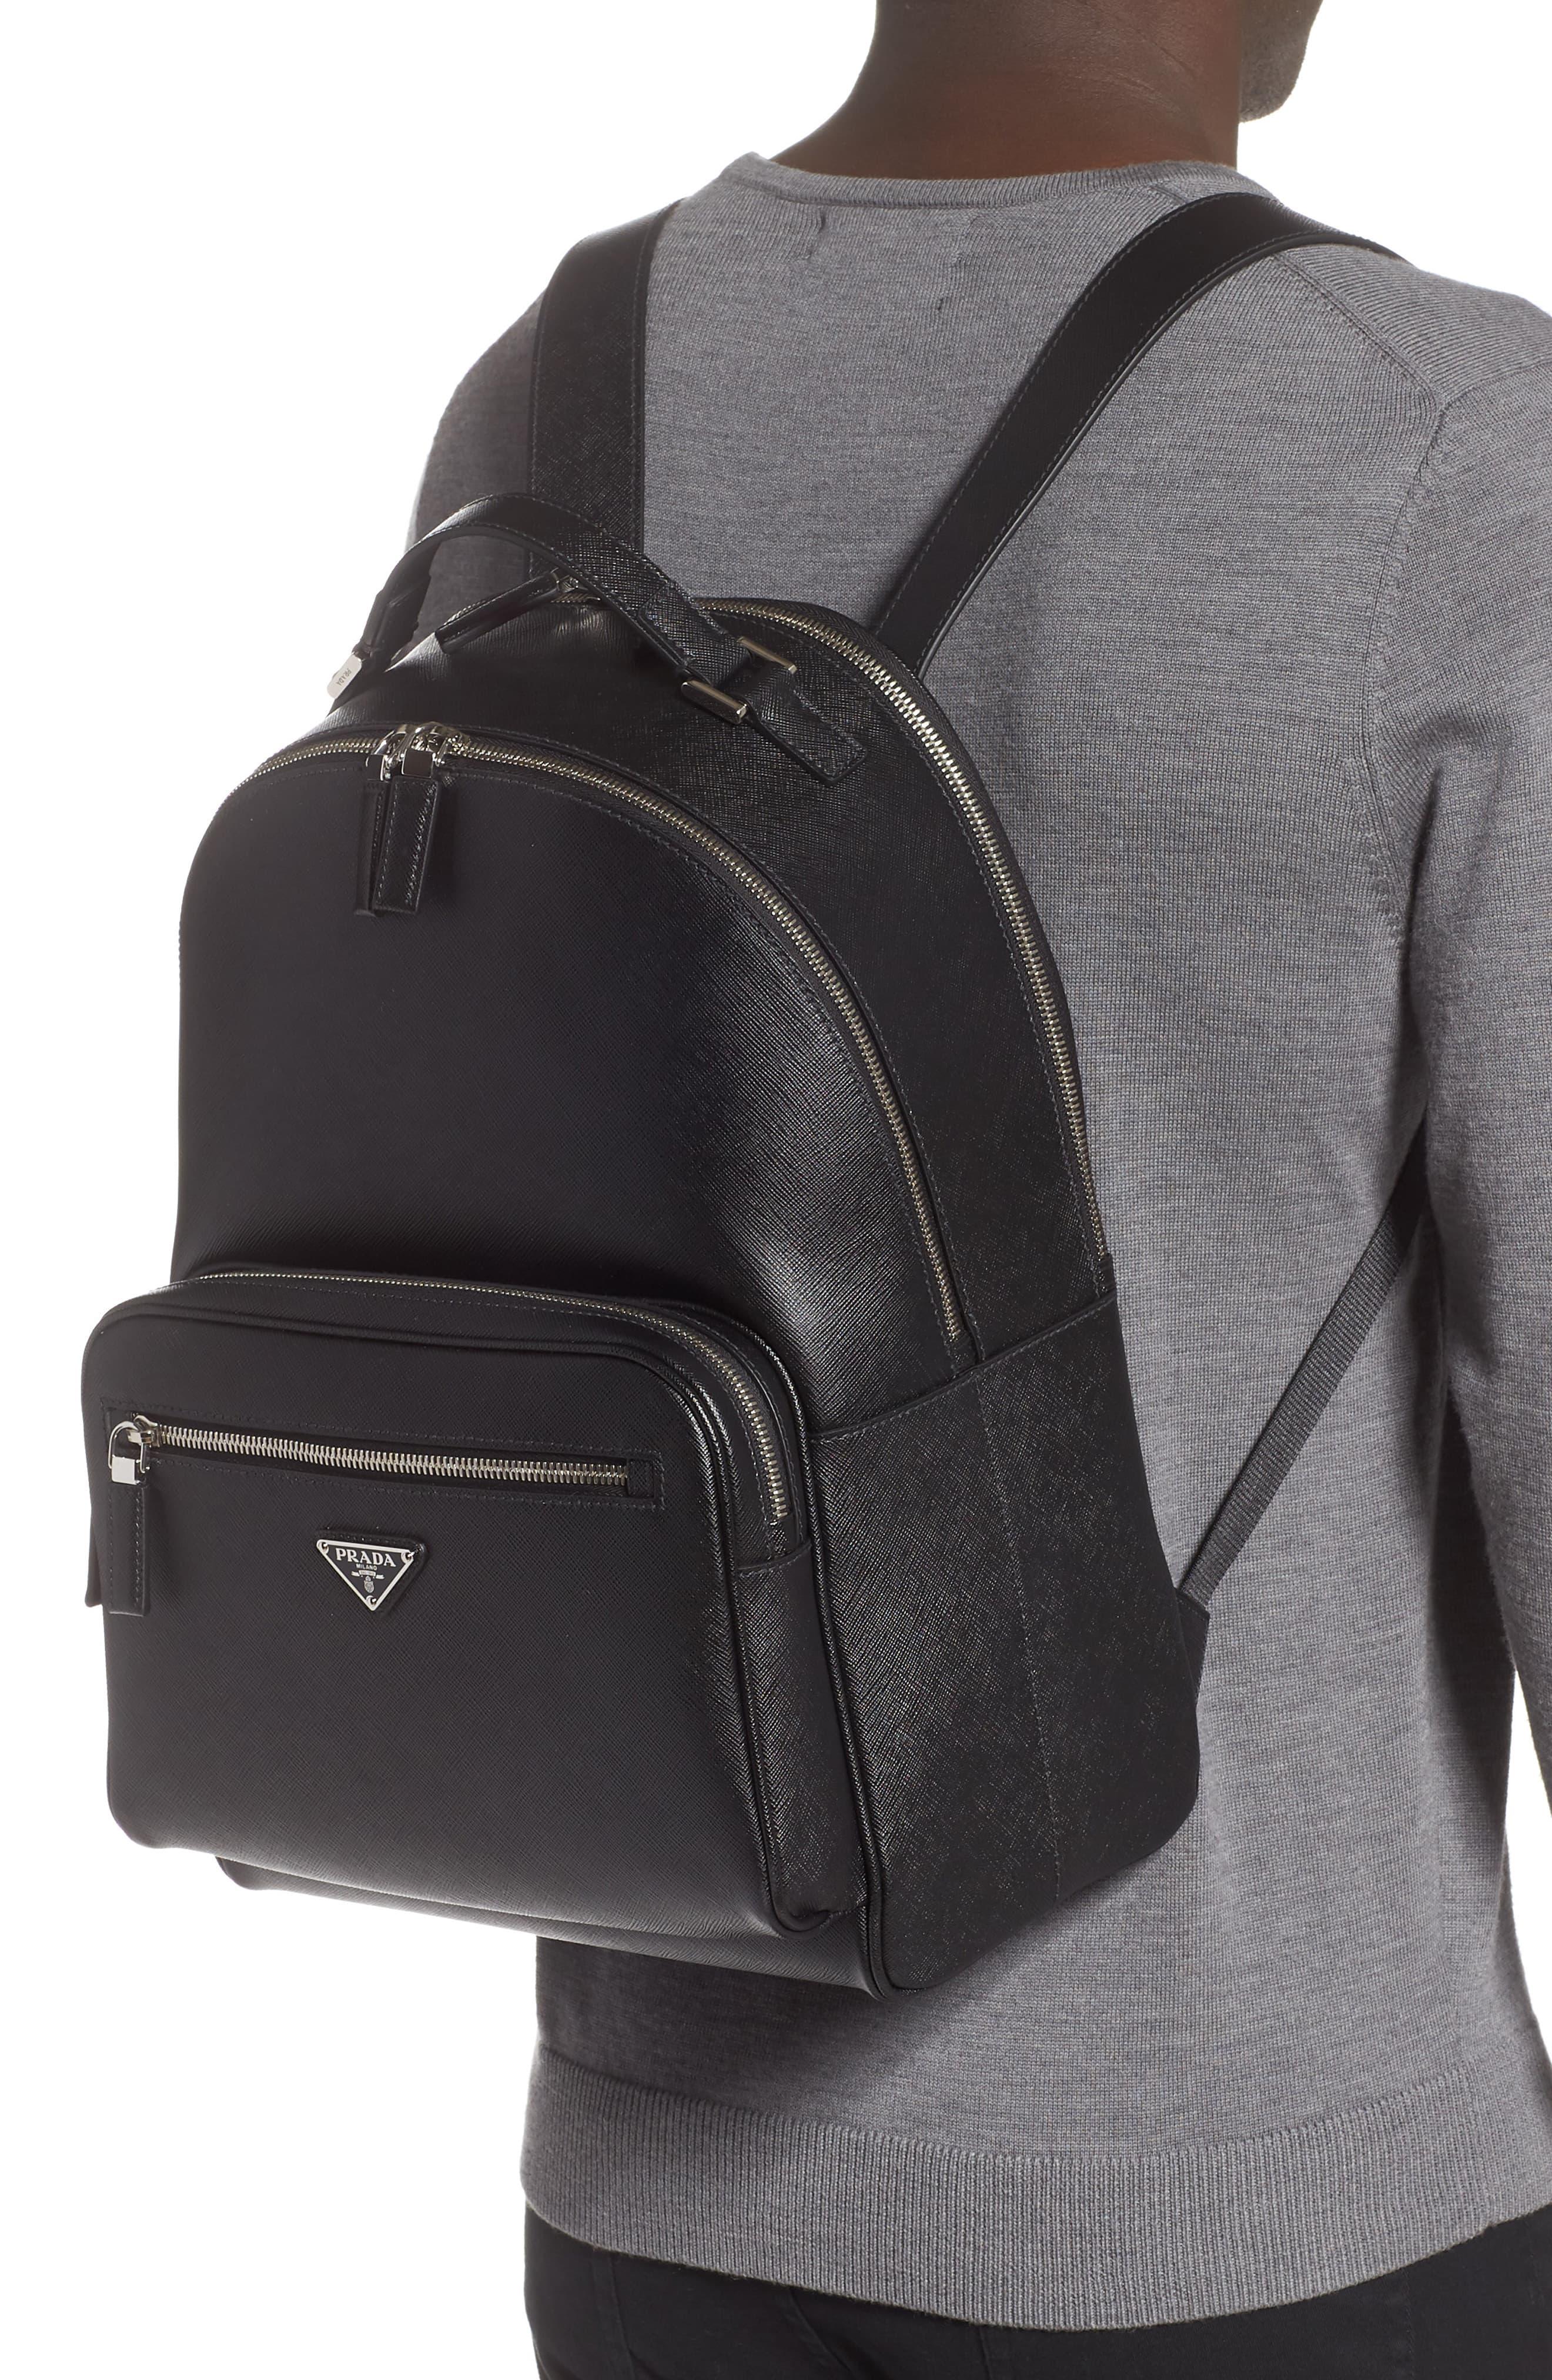 prada saffiano leather backpack